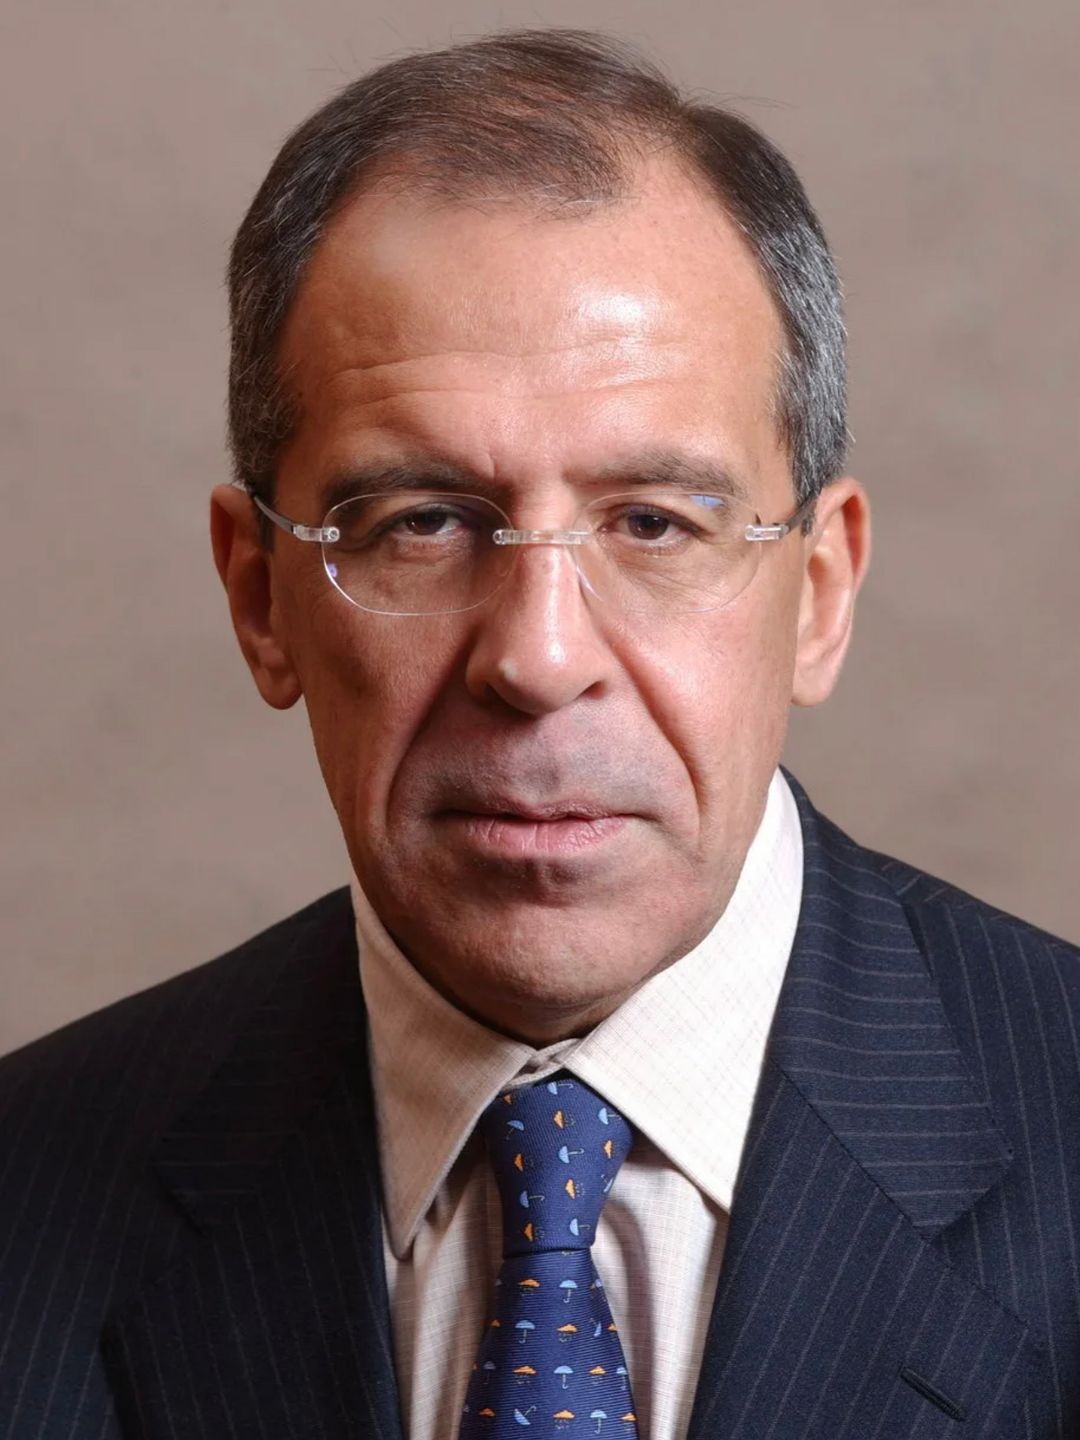 Sergey Lavrov appearance